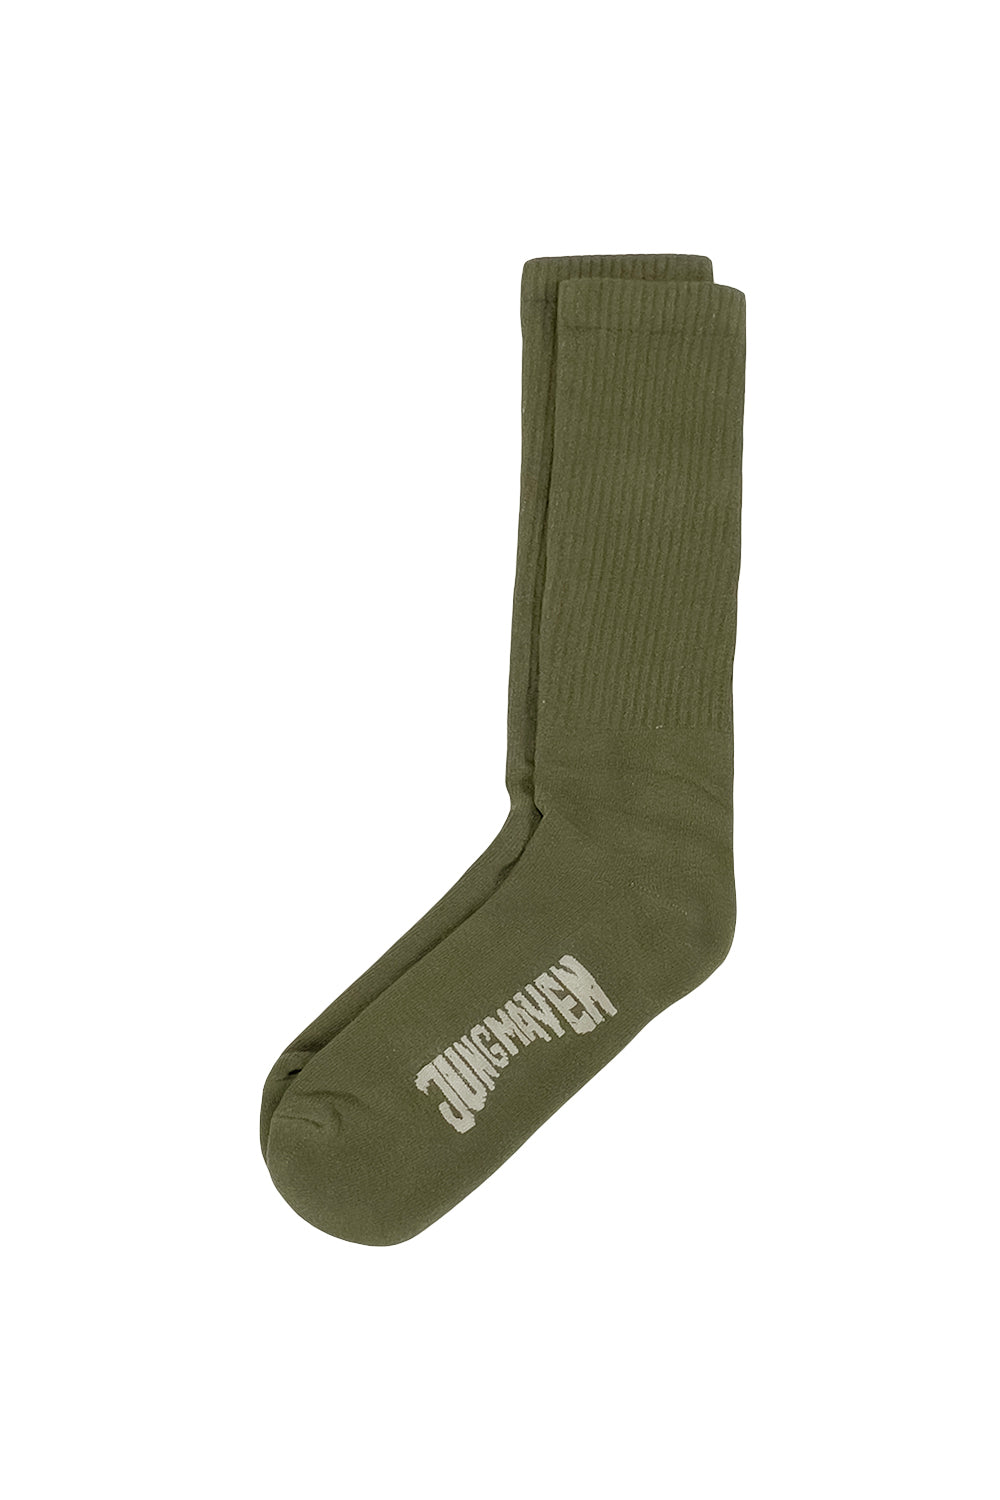 Hemp Crew Socks | Jungmaven Hemp Clothing & Accessories / Color: Olive Green OS